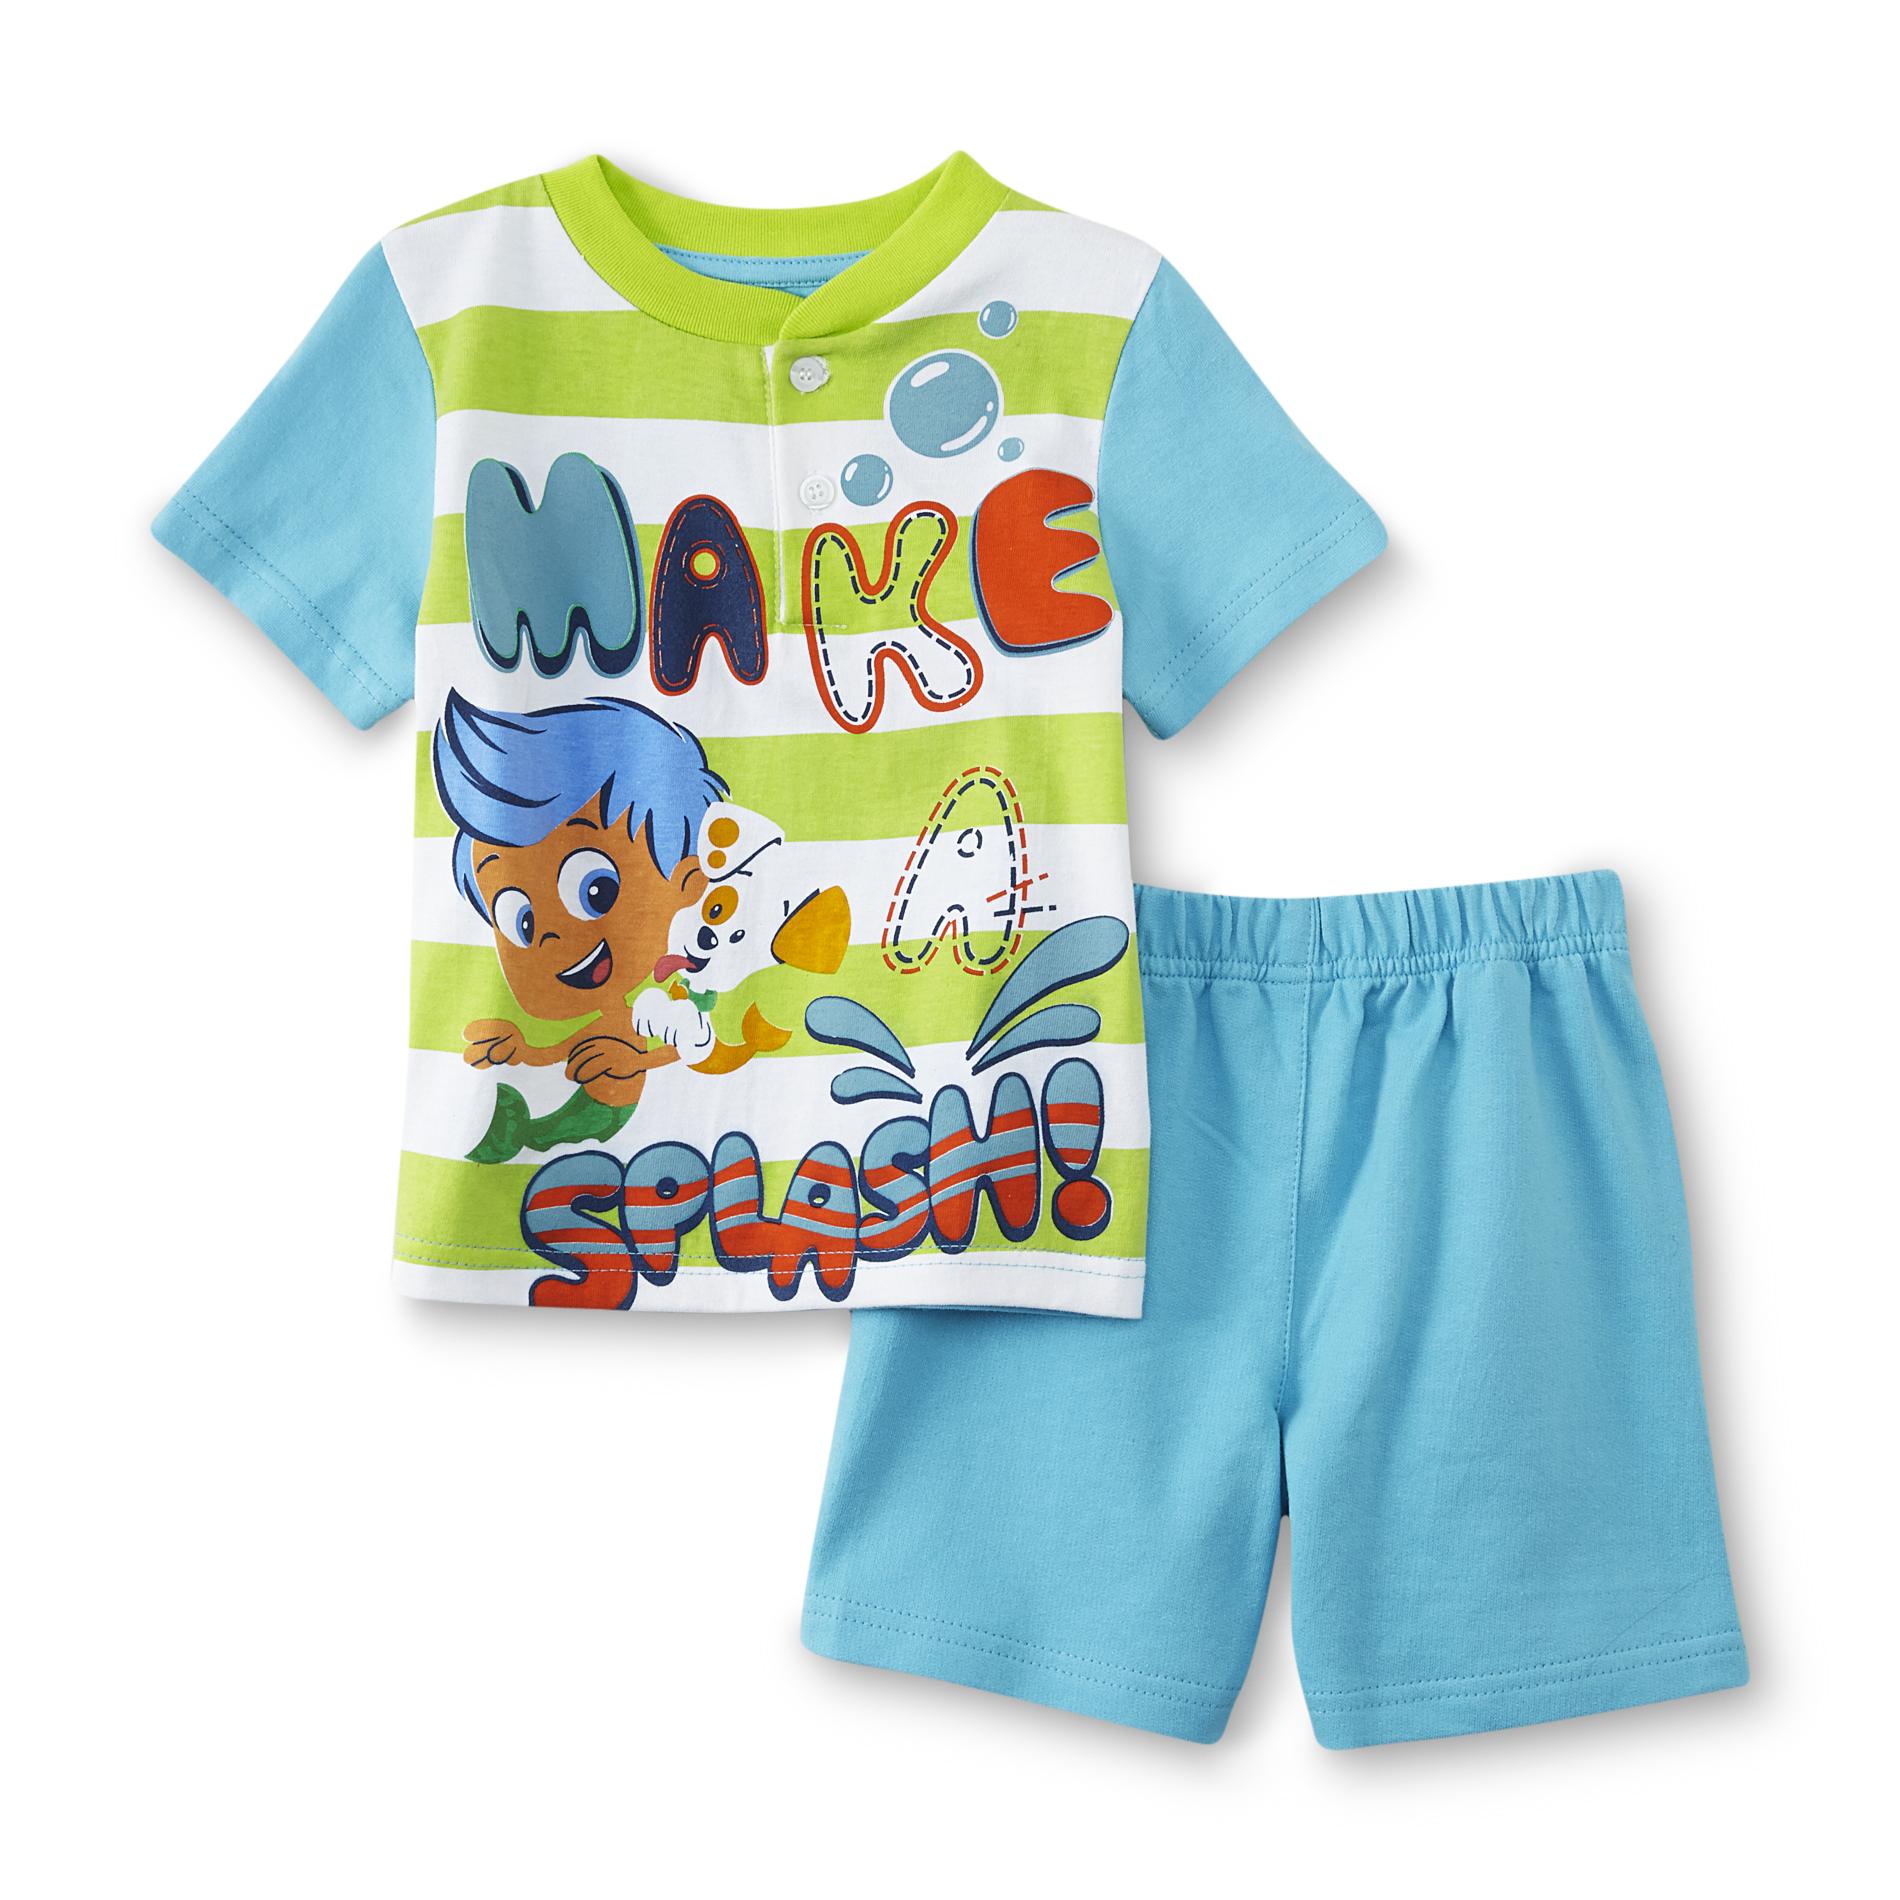 Nickelodeon Bubble Guppies Infant & Toddler Boy's Shirt & Shorts